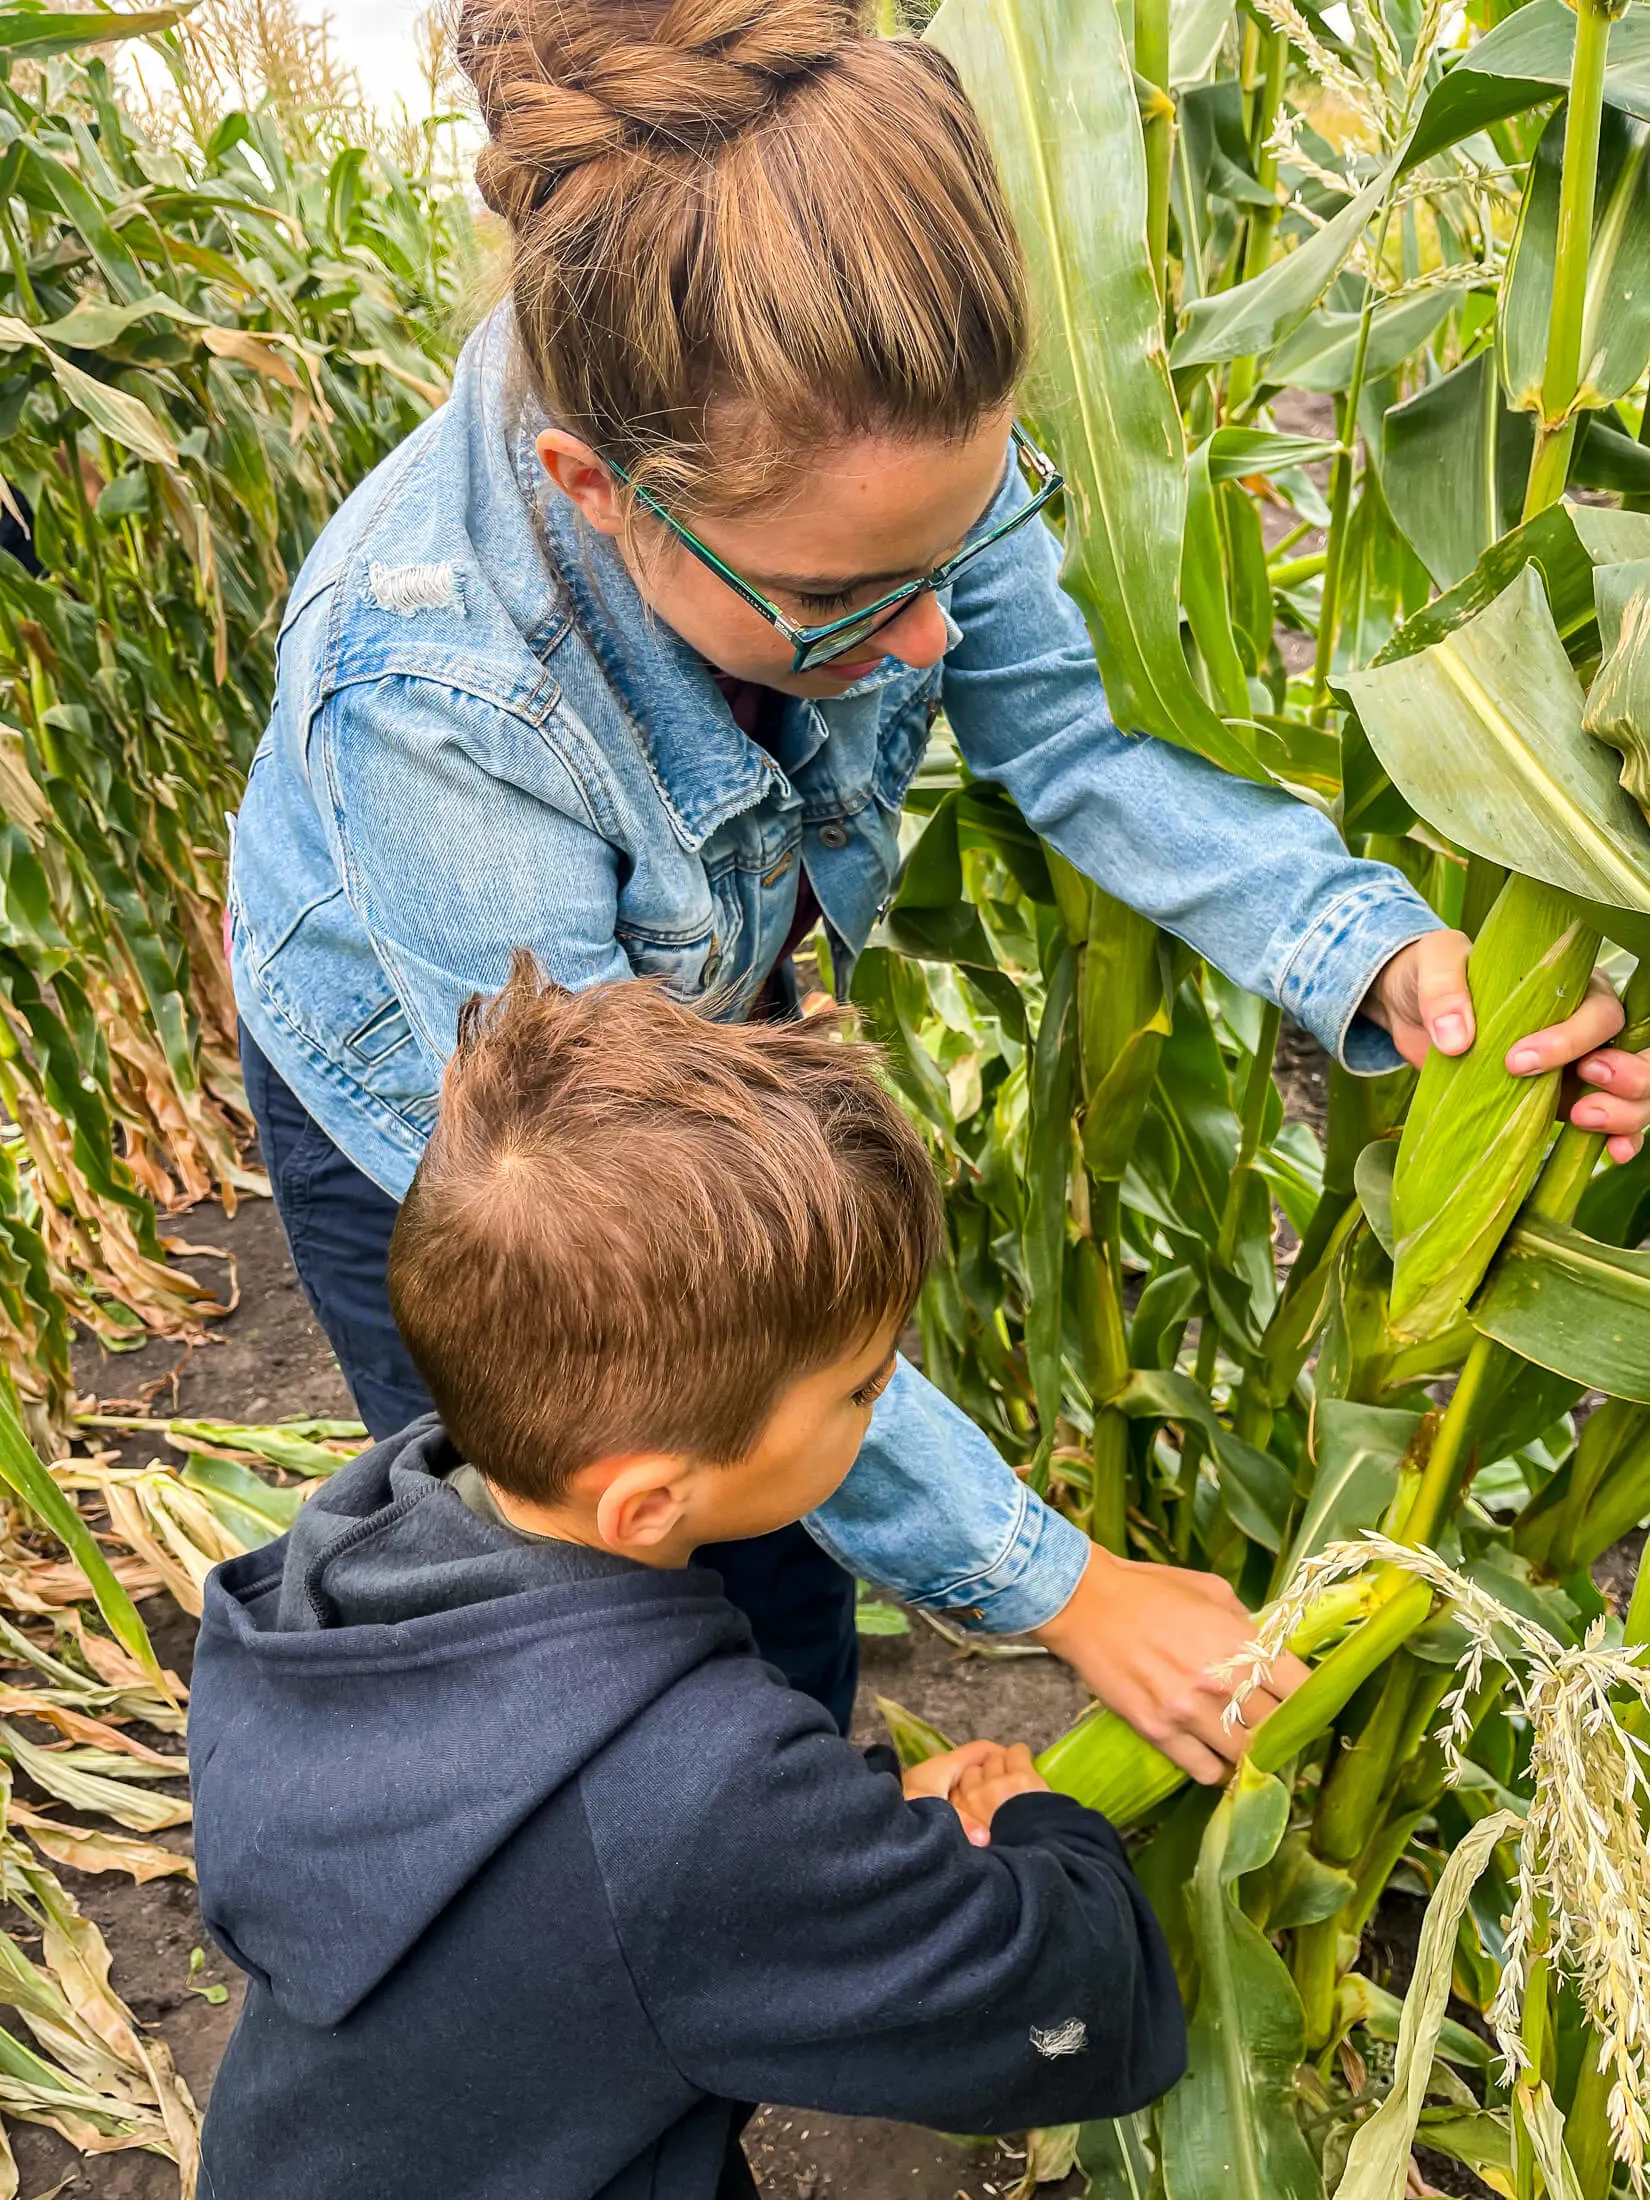 Woman and child harvesting corn. 